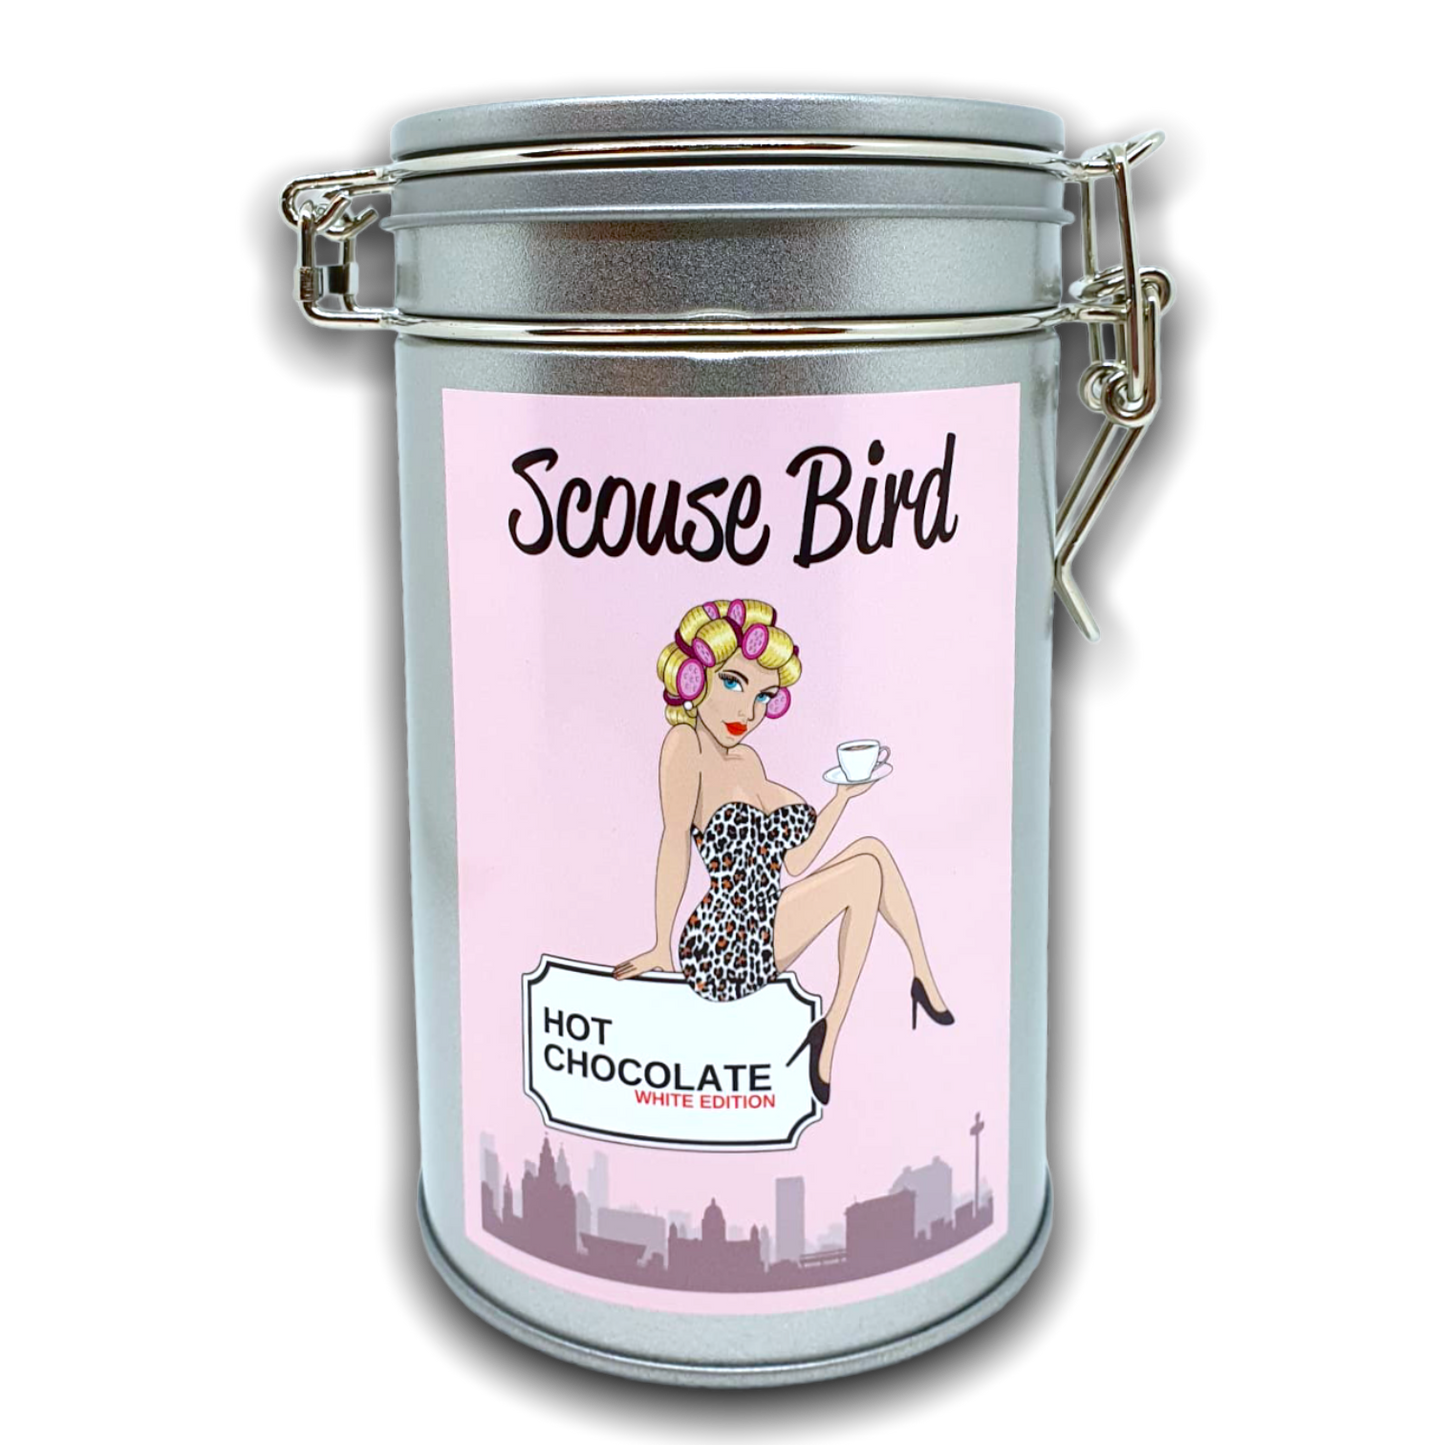 Scouse Bird Real Hot Chocolate (200g) - Pink